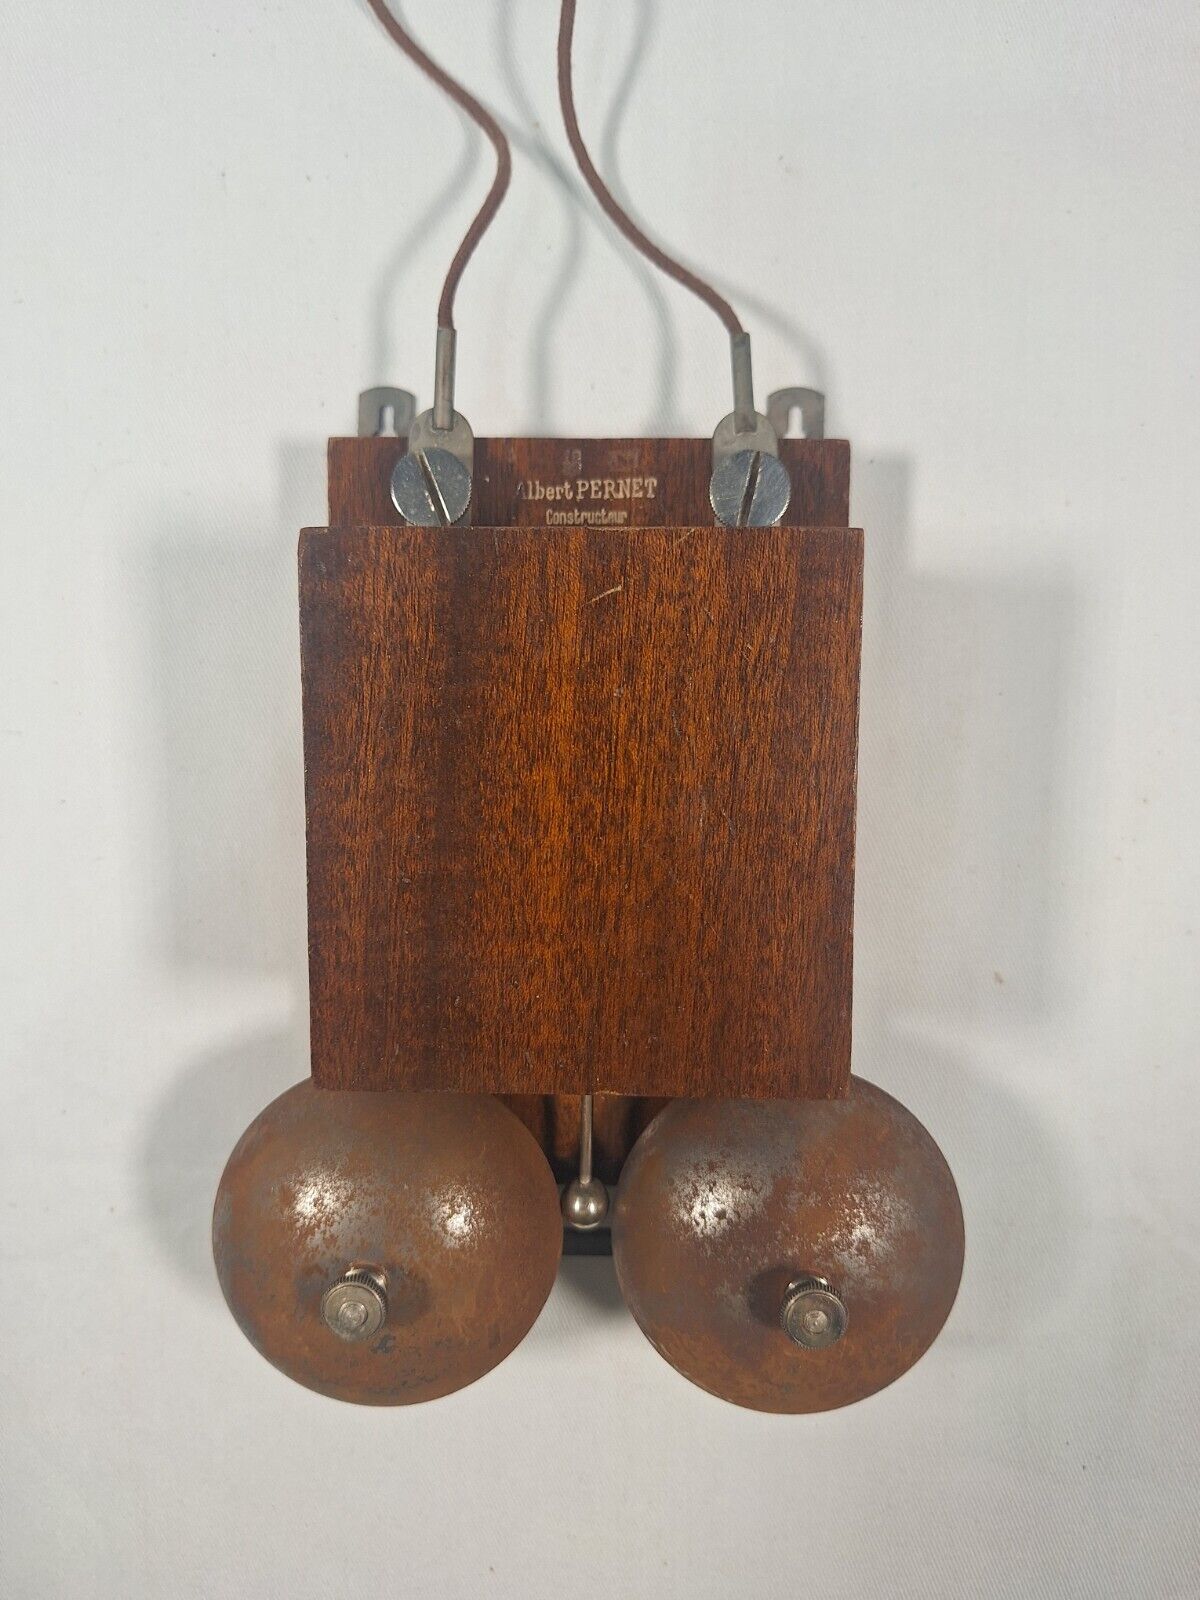 French Working Antique Telephone Ringer Bell Doorbell Albert Pernet